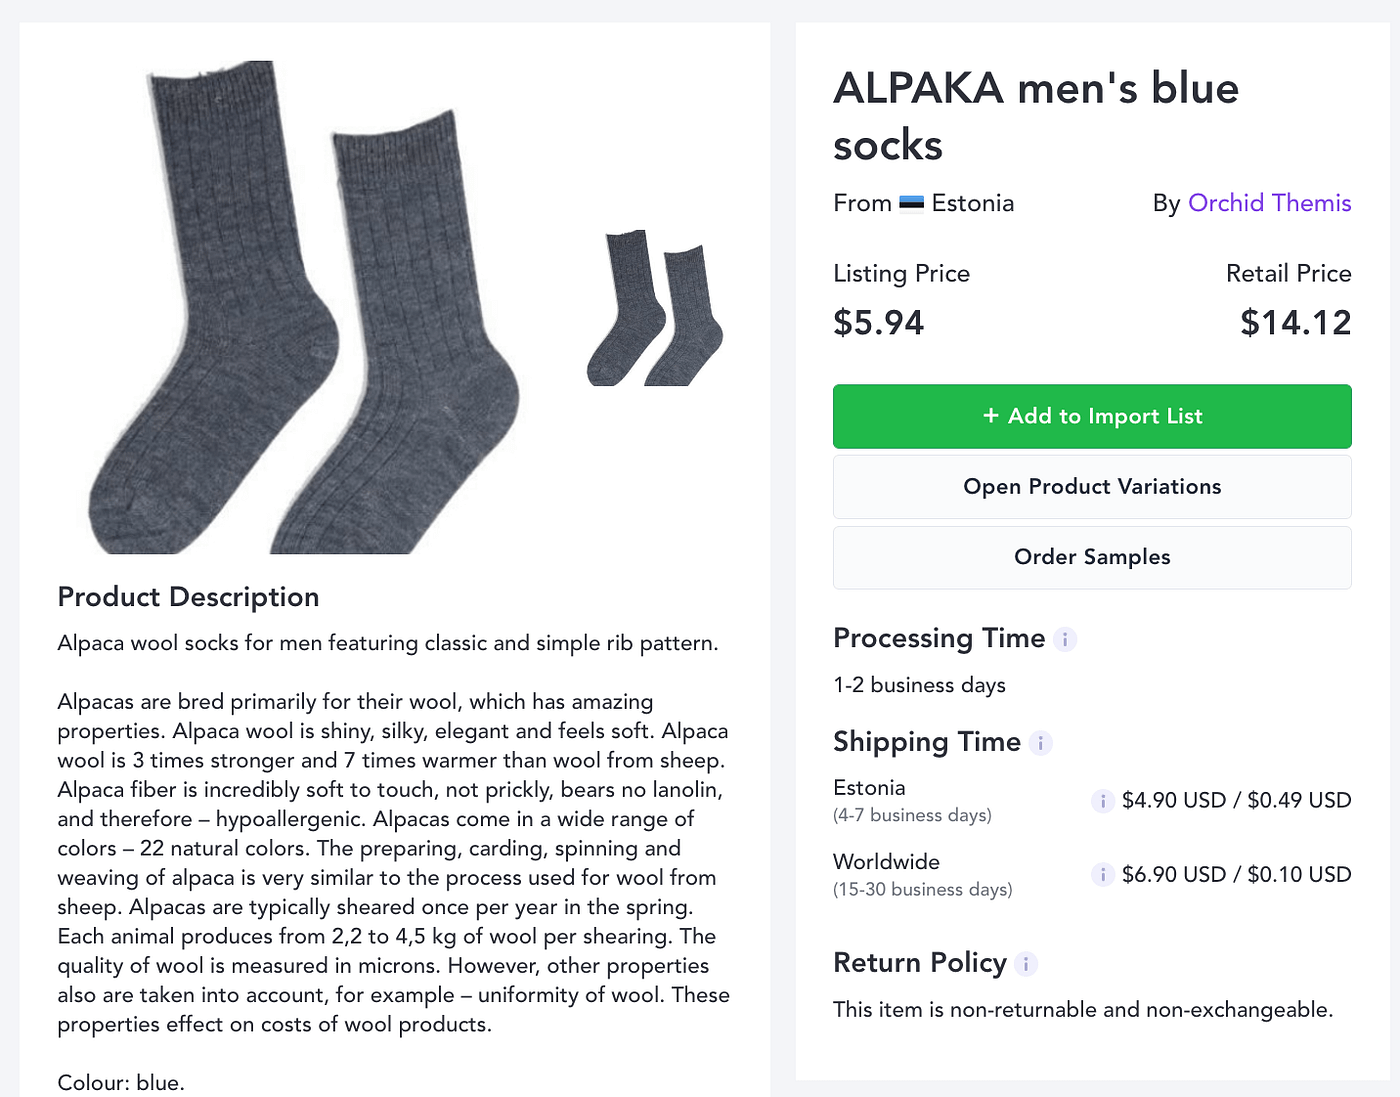 How I Made $66,525 in 2 Weeks Selling Socks Online | by Joseph Mavericks |  Medium